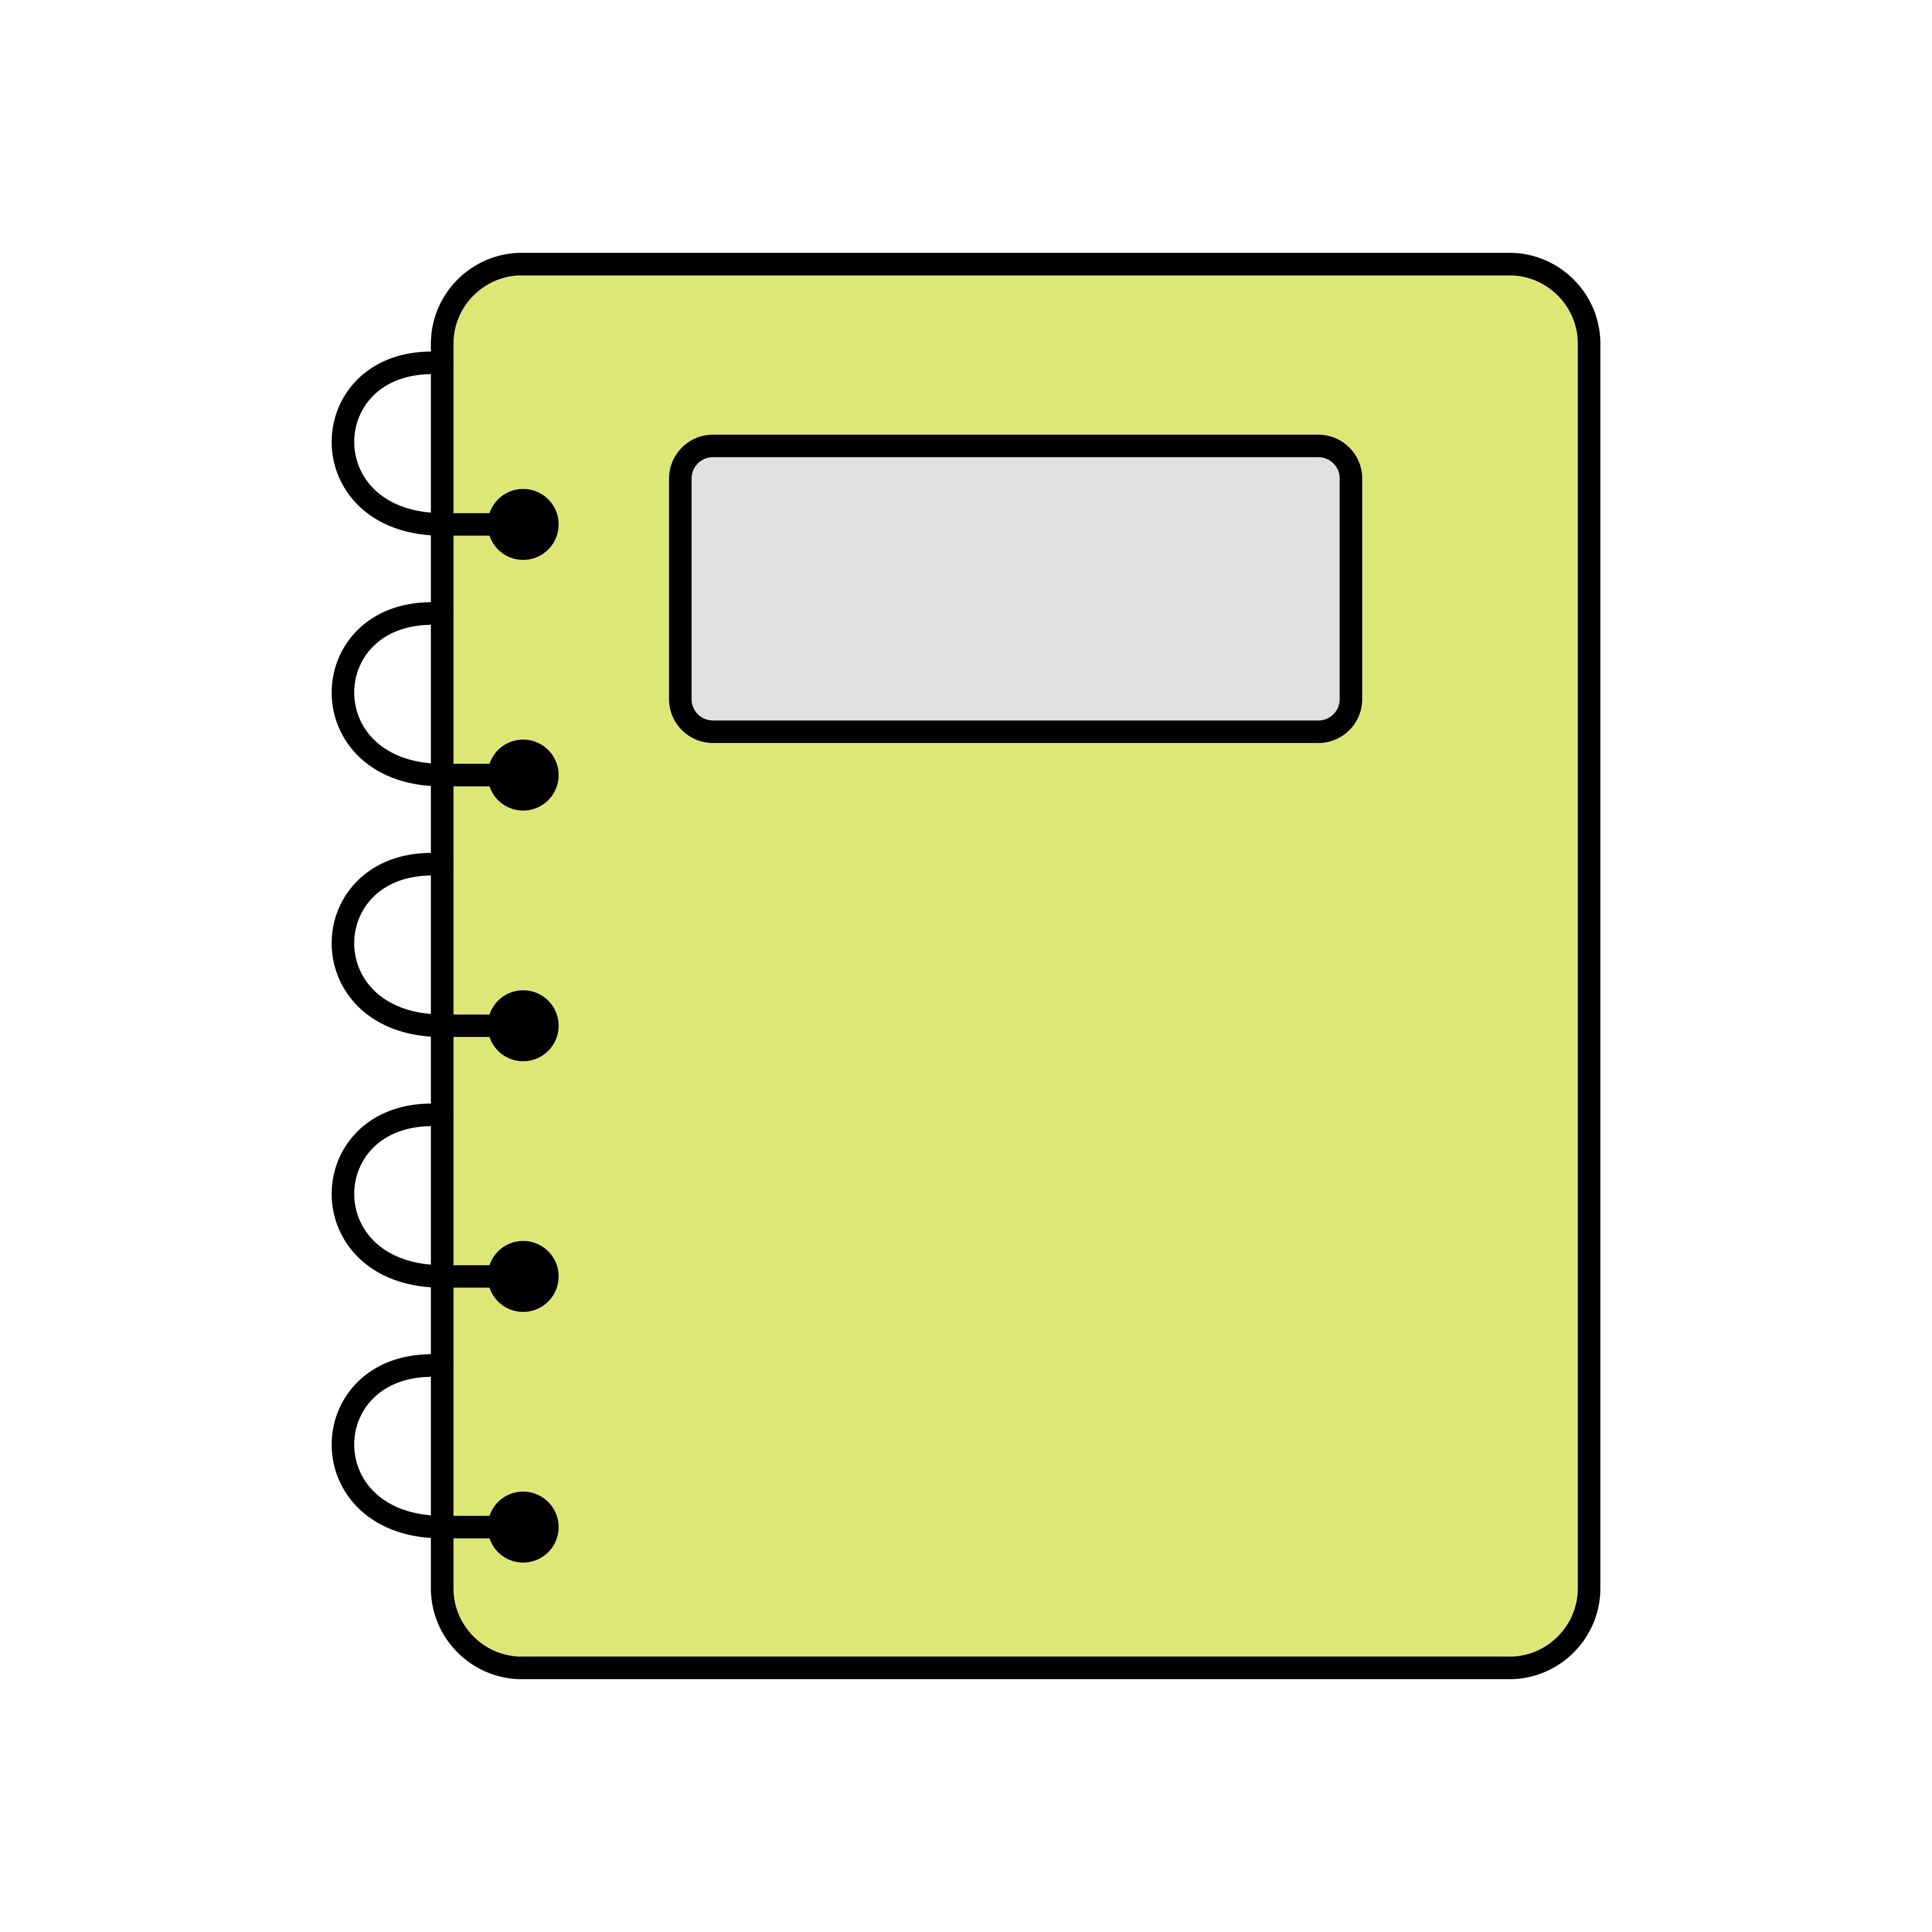  Notepad  Vector Icon  Download Free  Vectors Clipart 